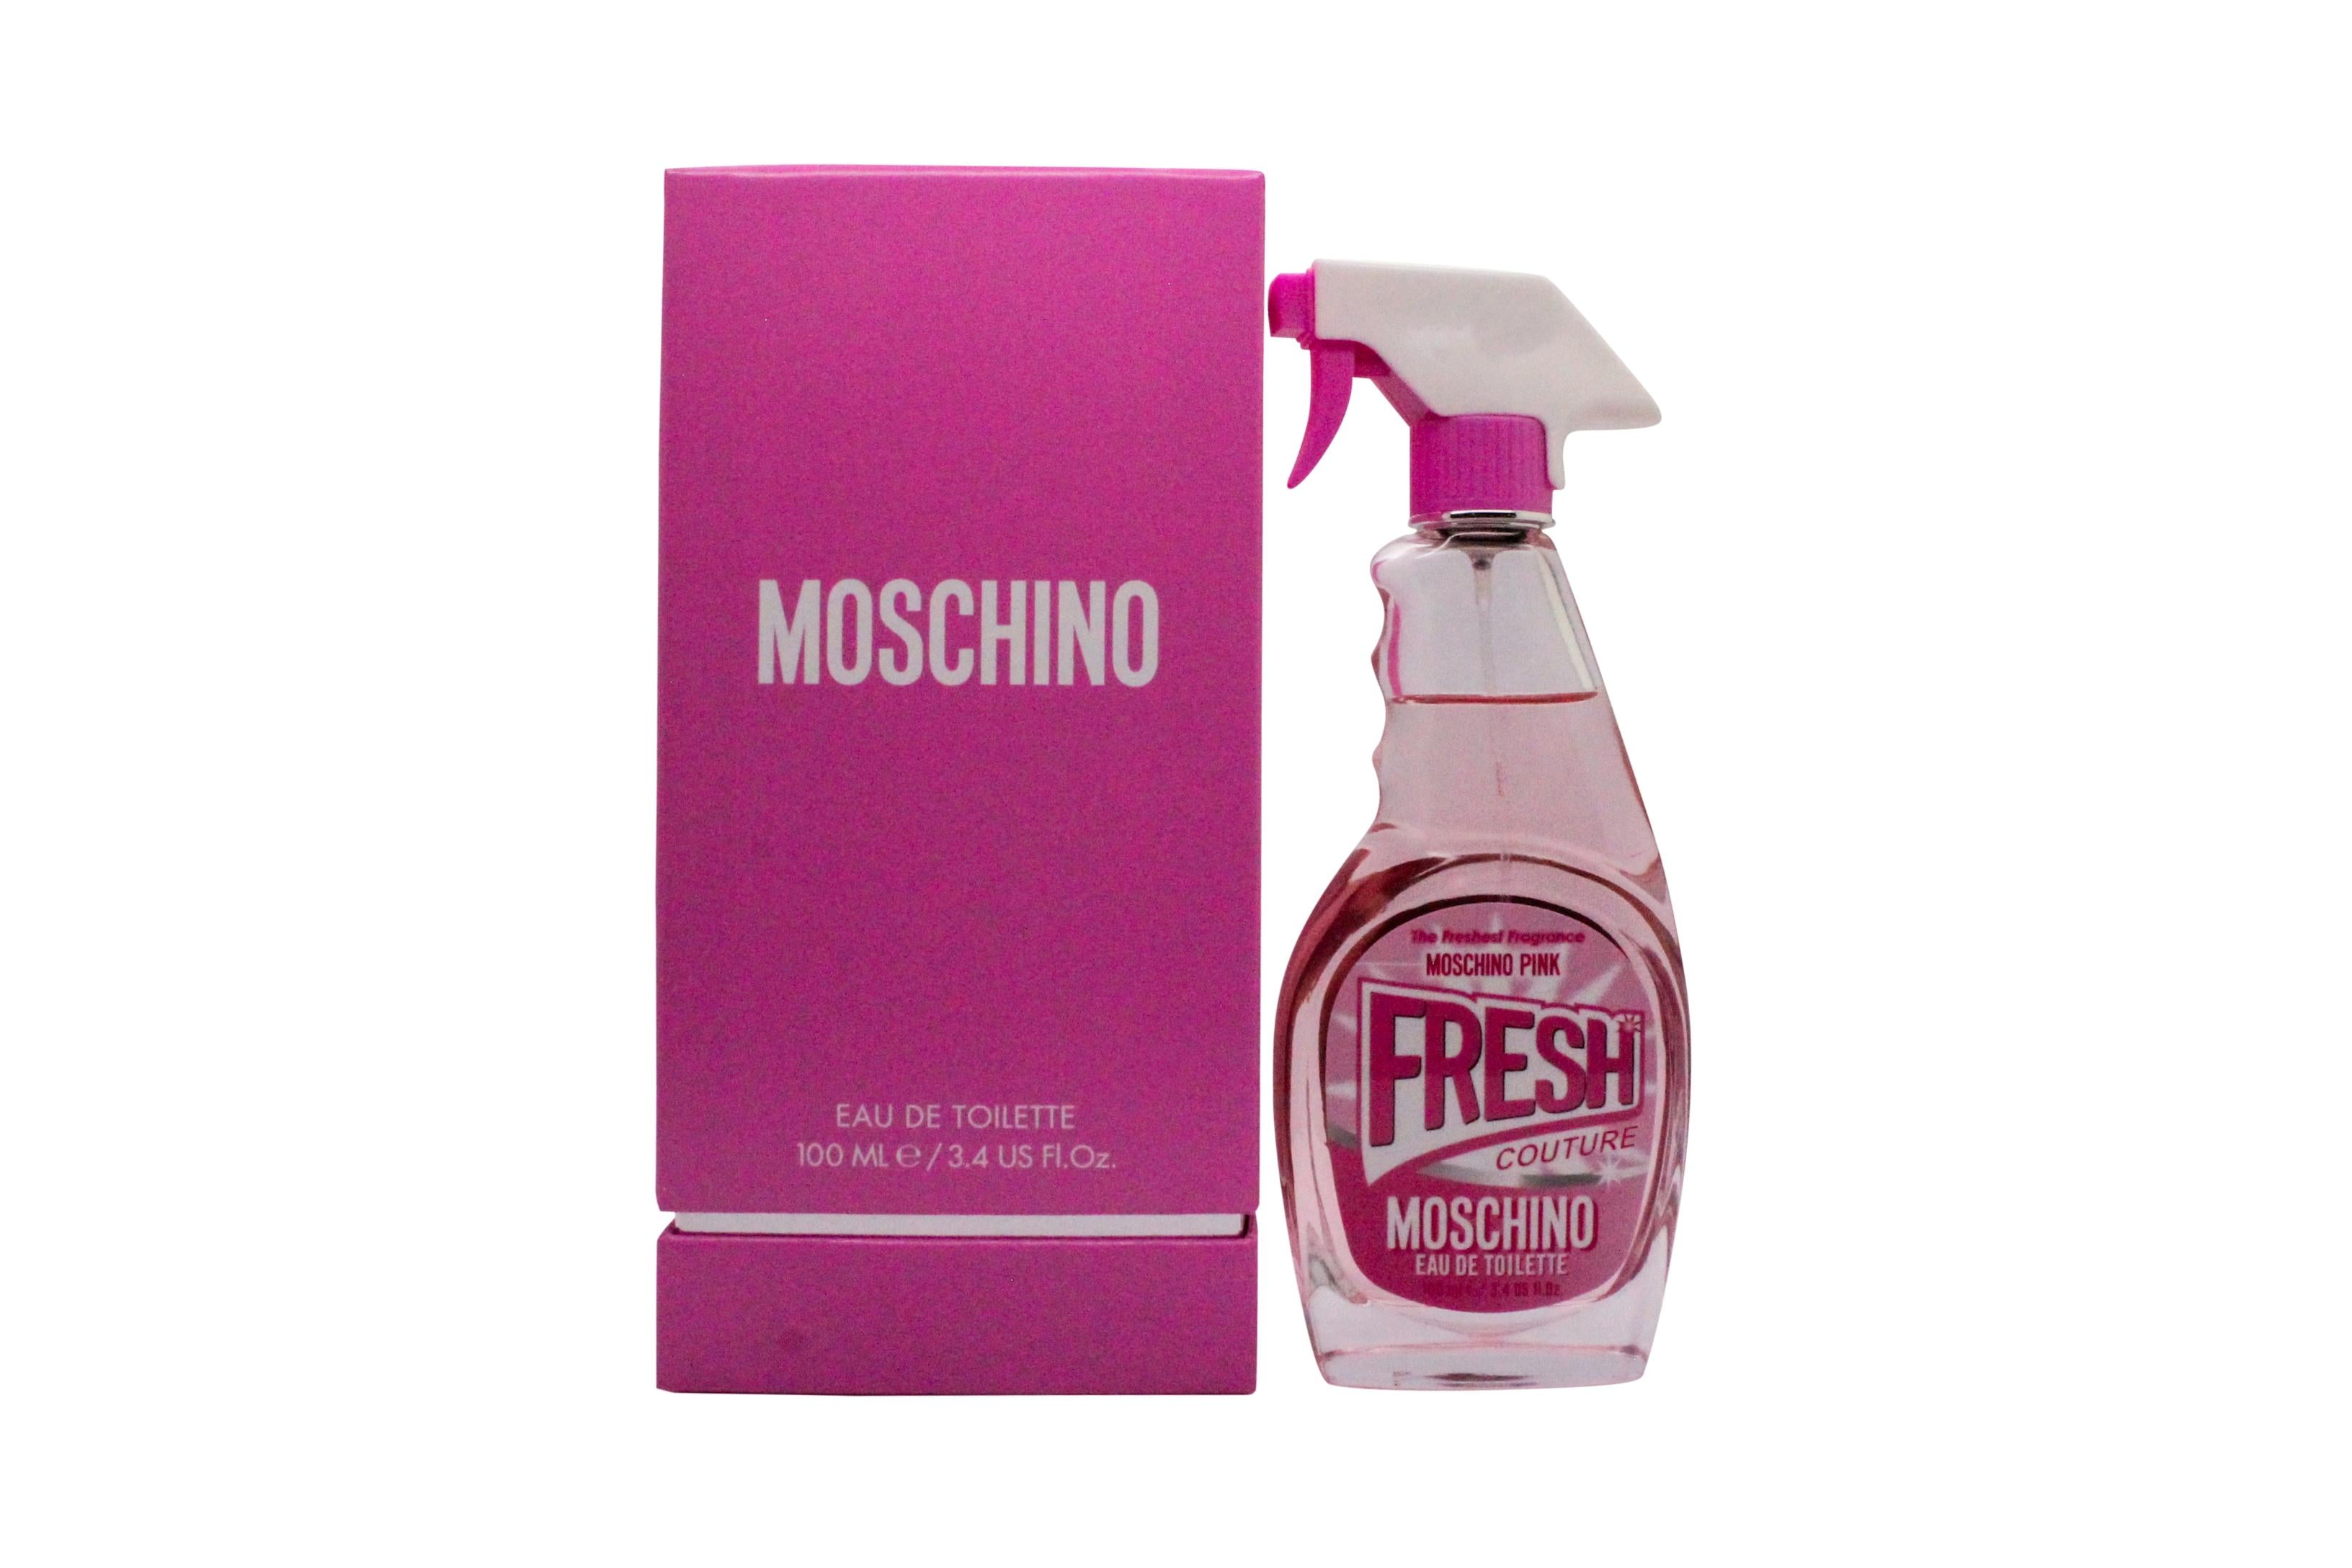 View Moschino Fresh Couture Pink Eau de Toilette 100ml Spray information